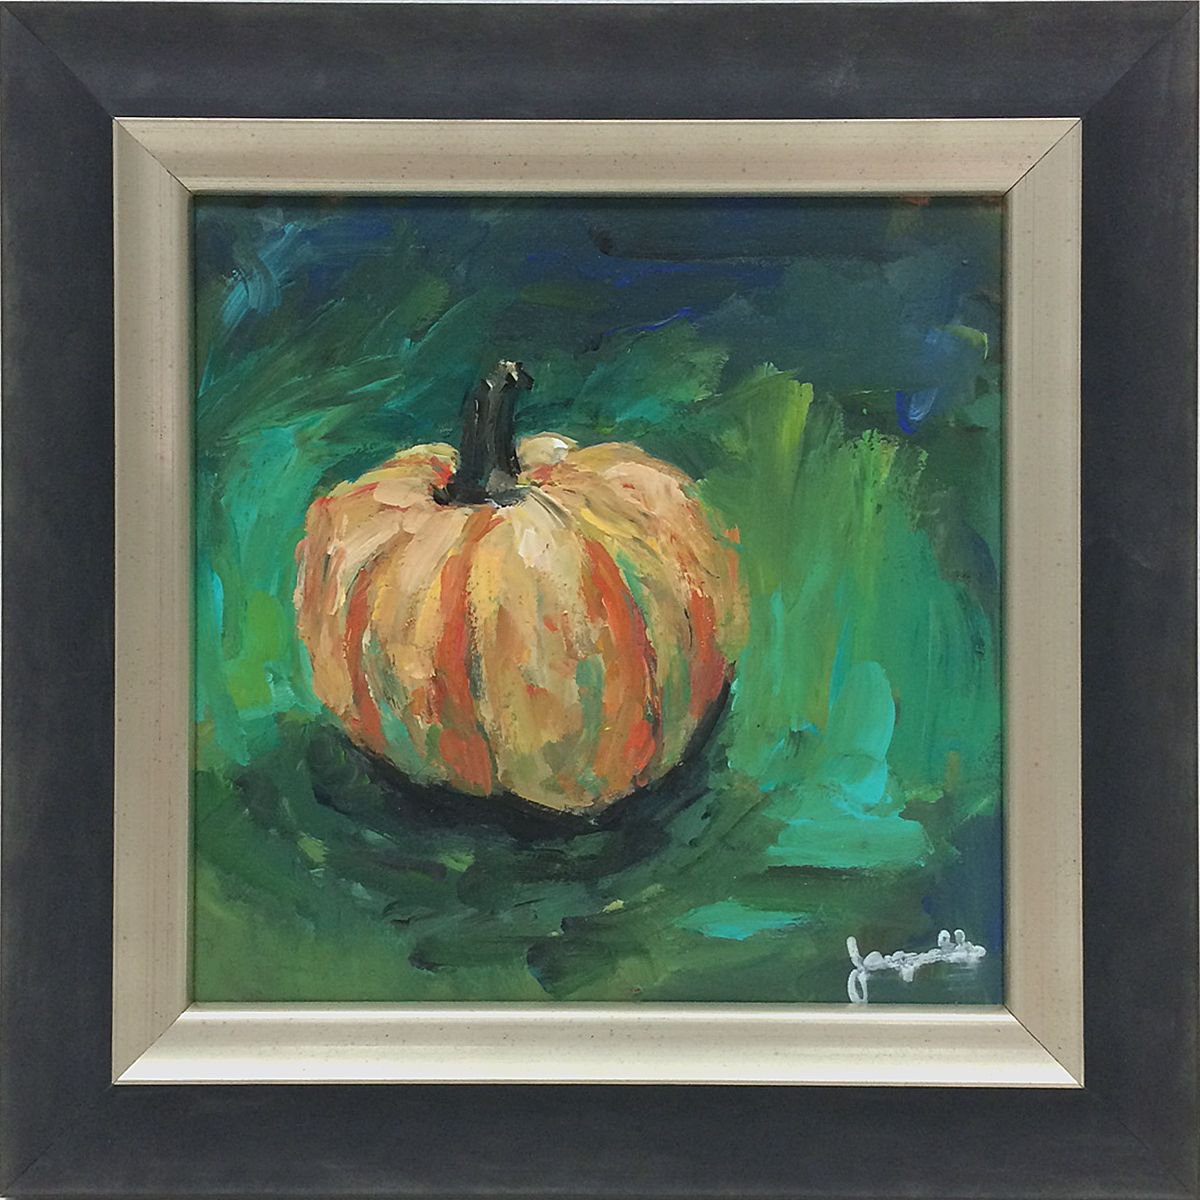 Little pumpkin in green by Jacqualine Zonneveld